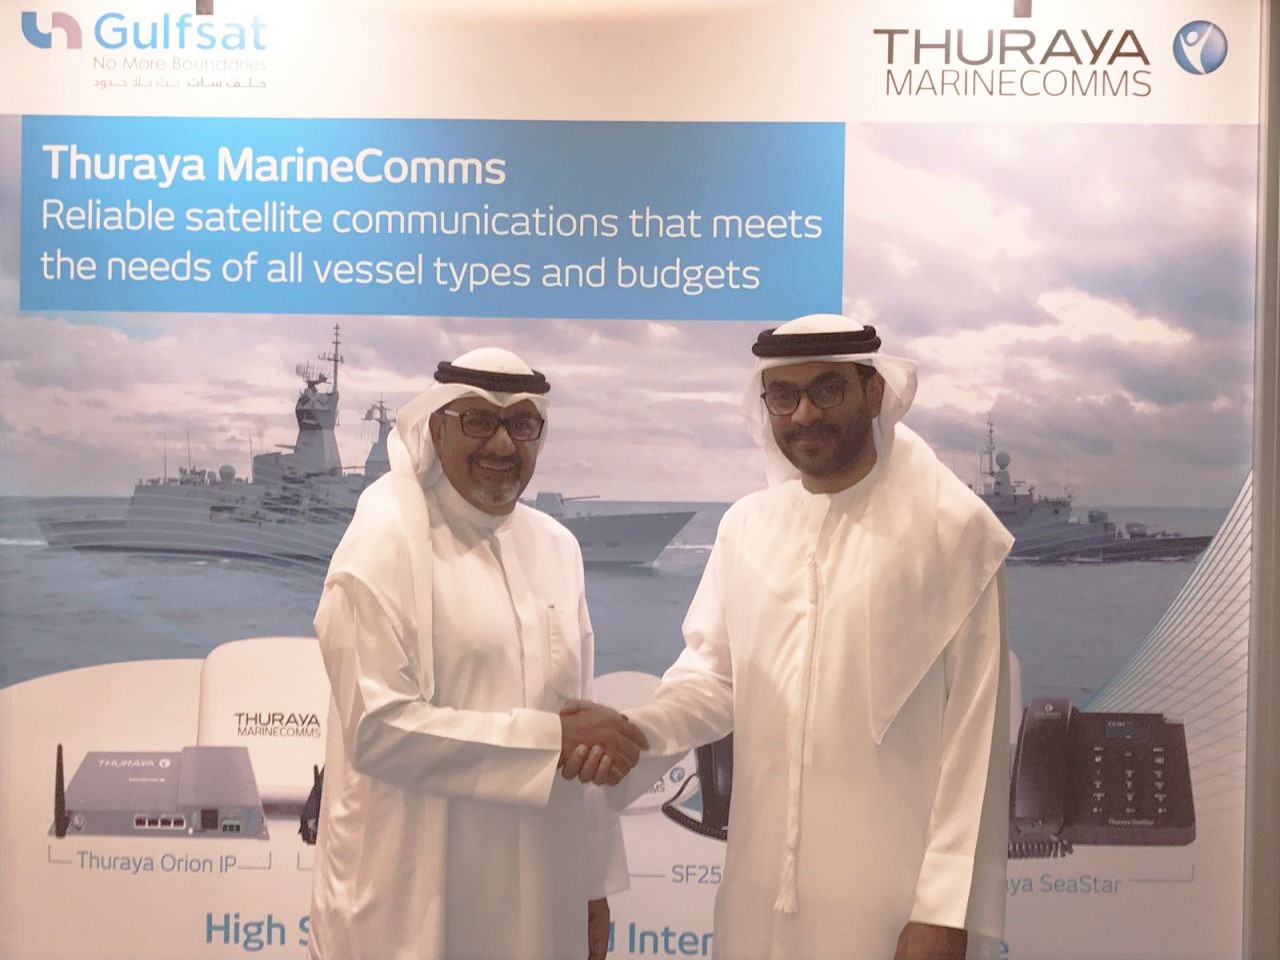 Thuraya signs partnership with GulfSat